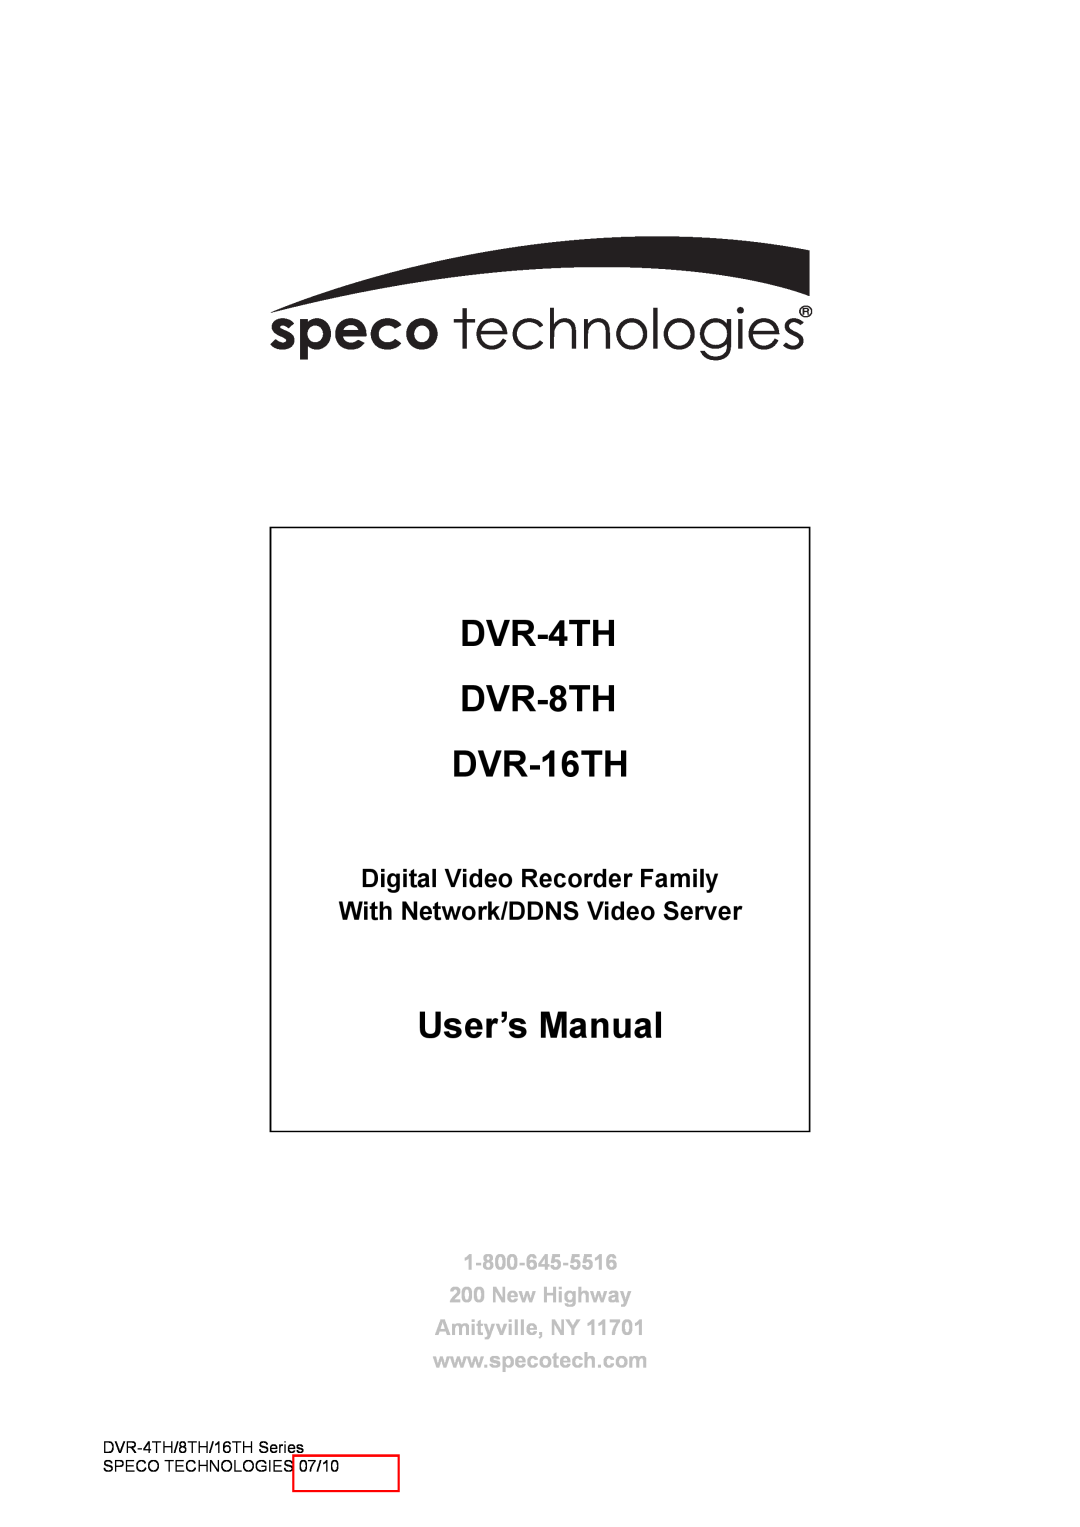 Speco Technologies user manual Digital Video Recorder Family With Network/DDNS Video Server, DVR-4TH DVR-8TH DVR-16TH 